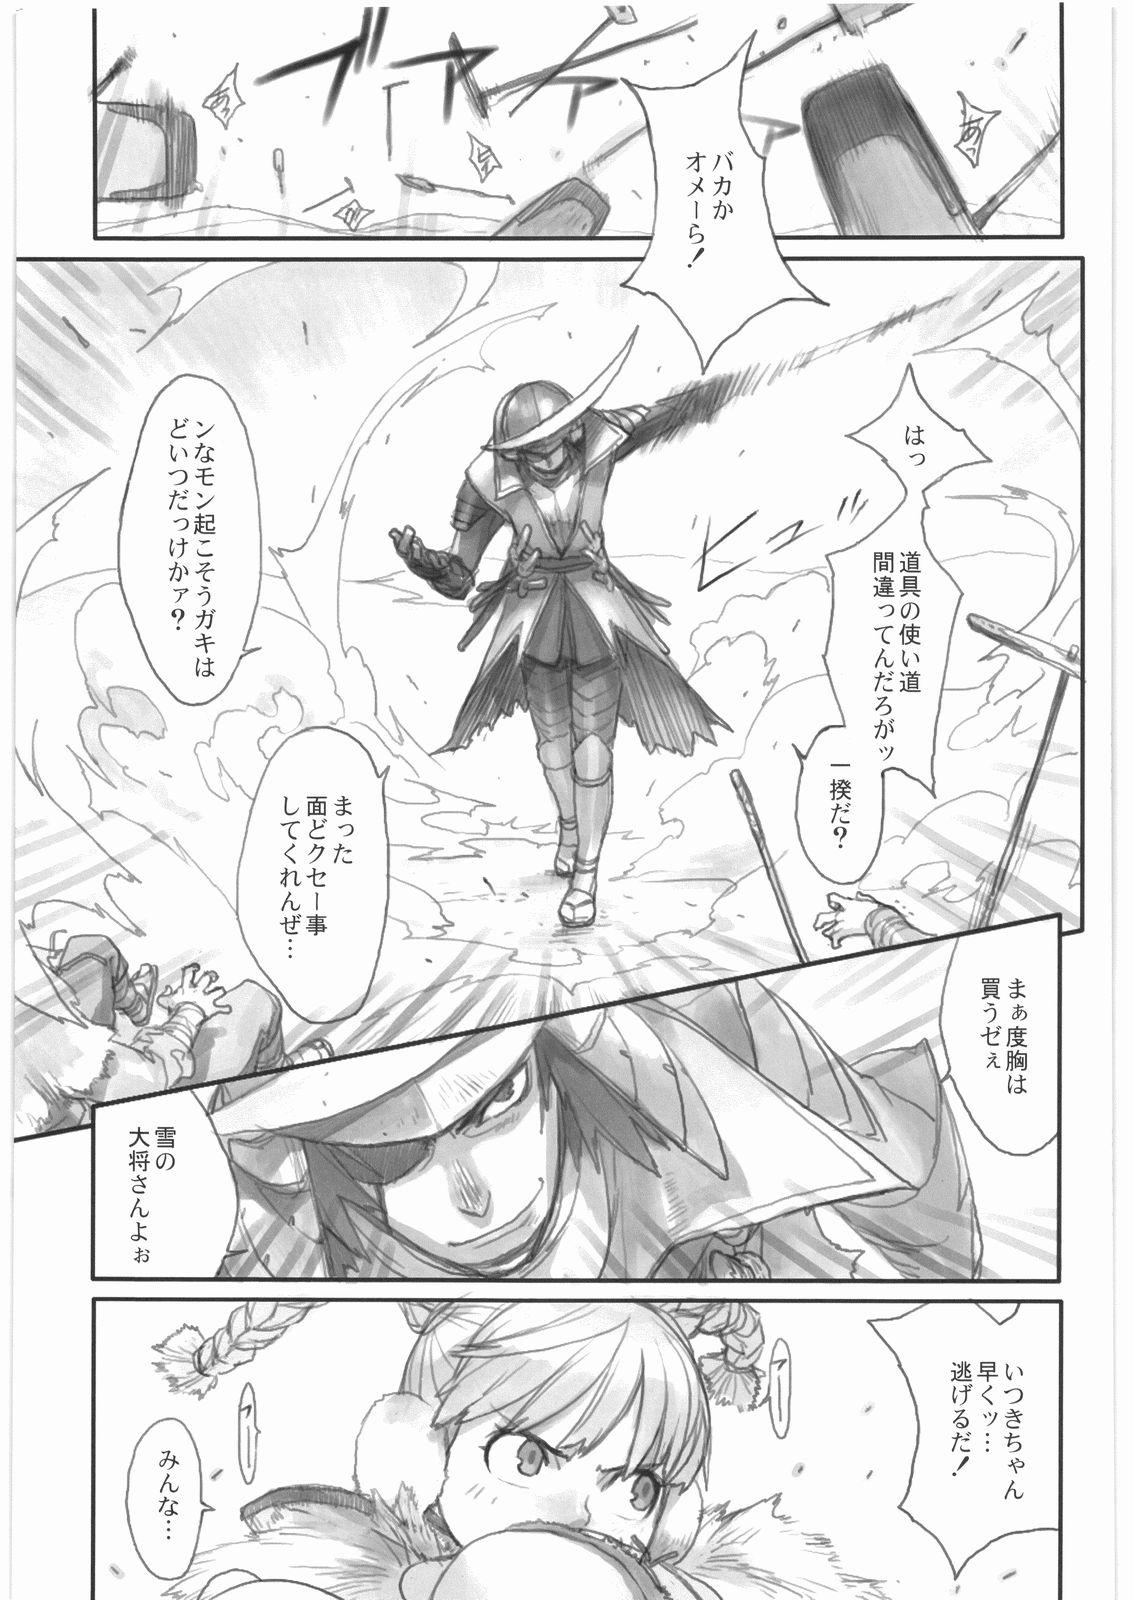 Foreplay Ichi+Ni - Sengoku basara HD - Page 6